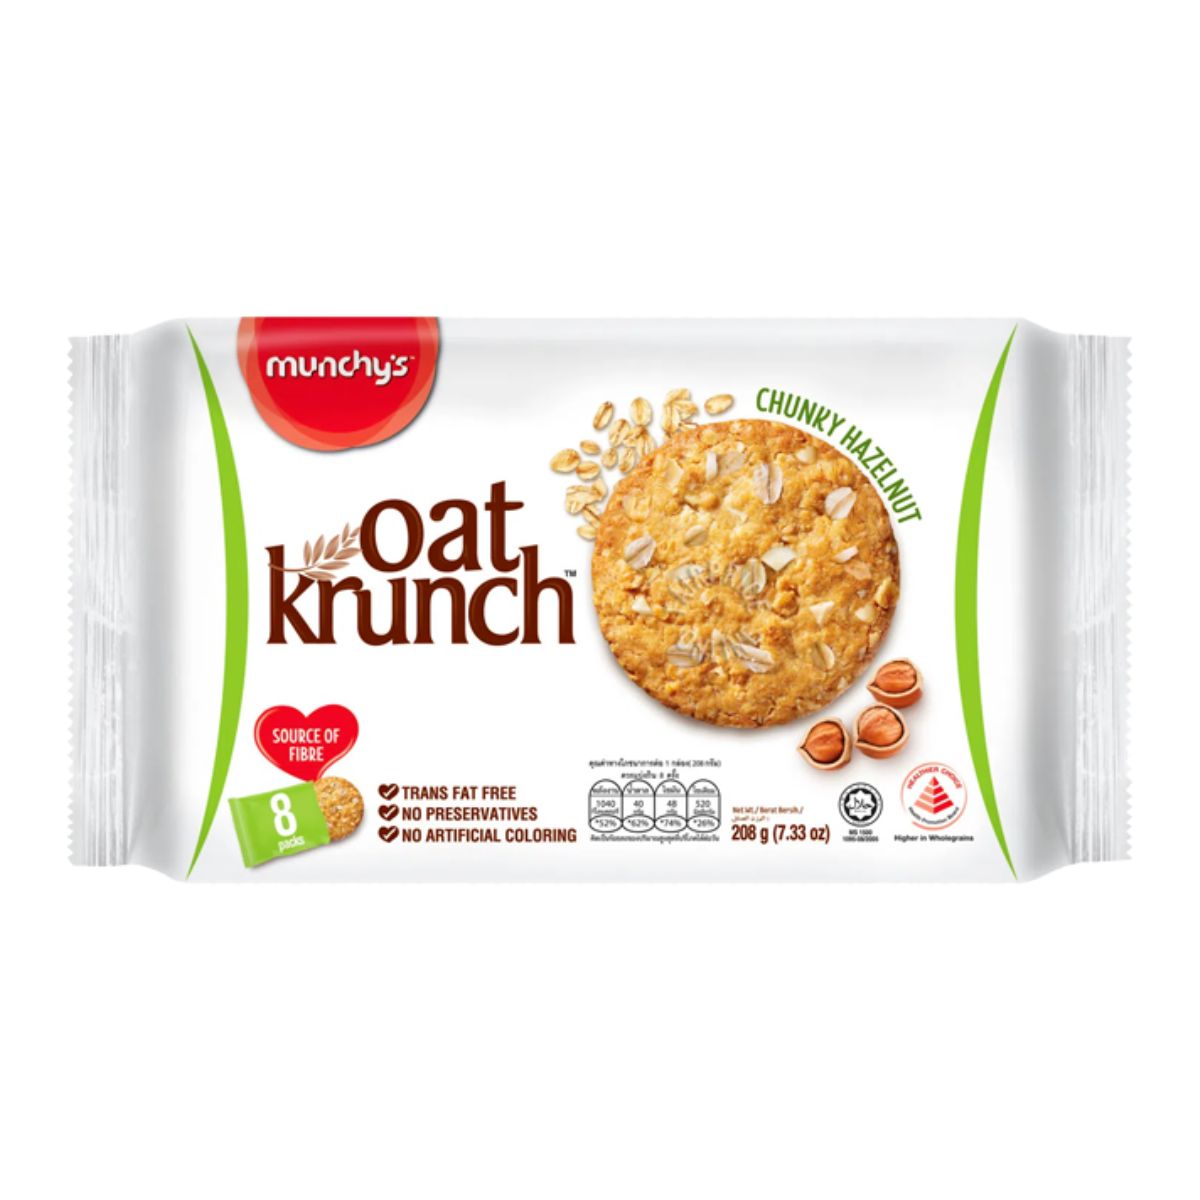 Munchy's Oat Krunch - Chunky Hazelnut - 208g